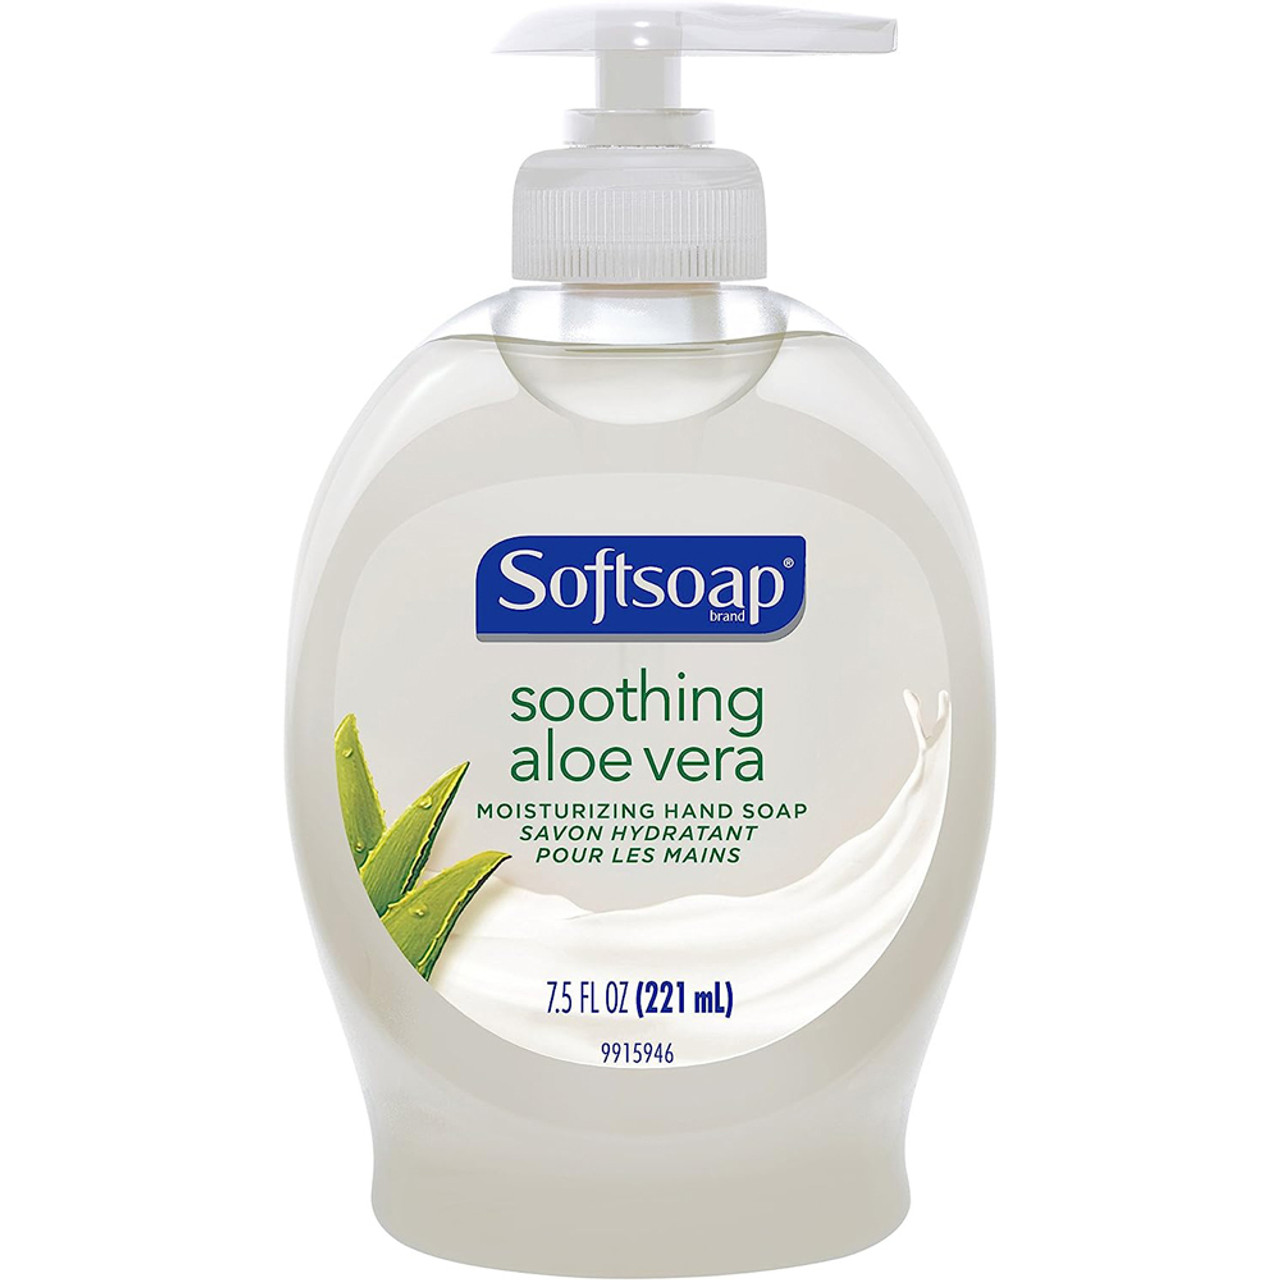 Softsoap Moisturizing Hand Soap Soothing Aloe Vera 75 Oz The Online Drugstore 